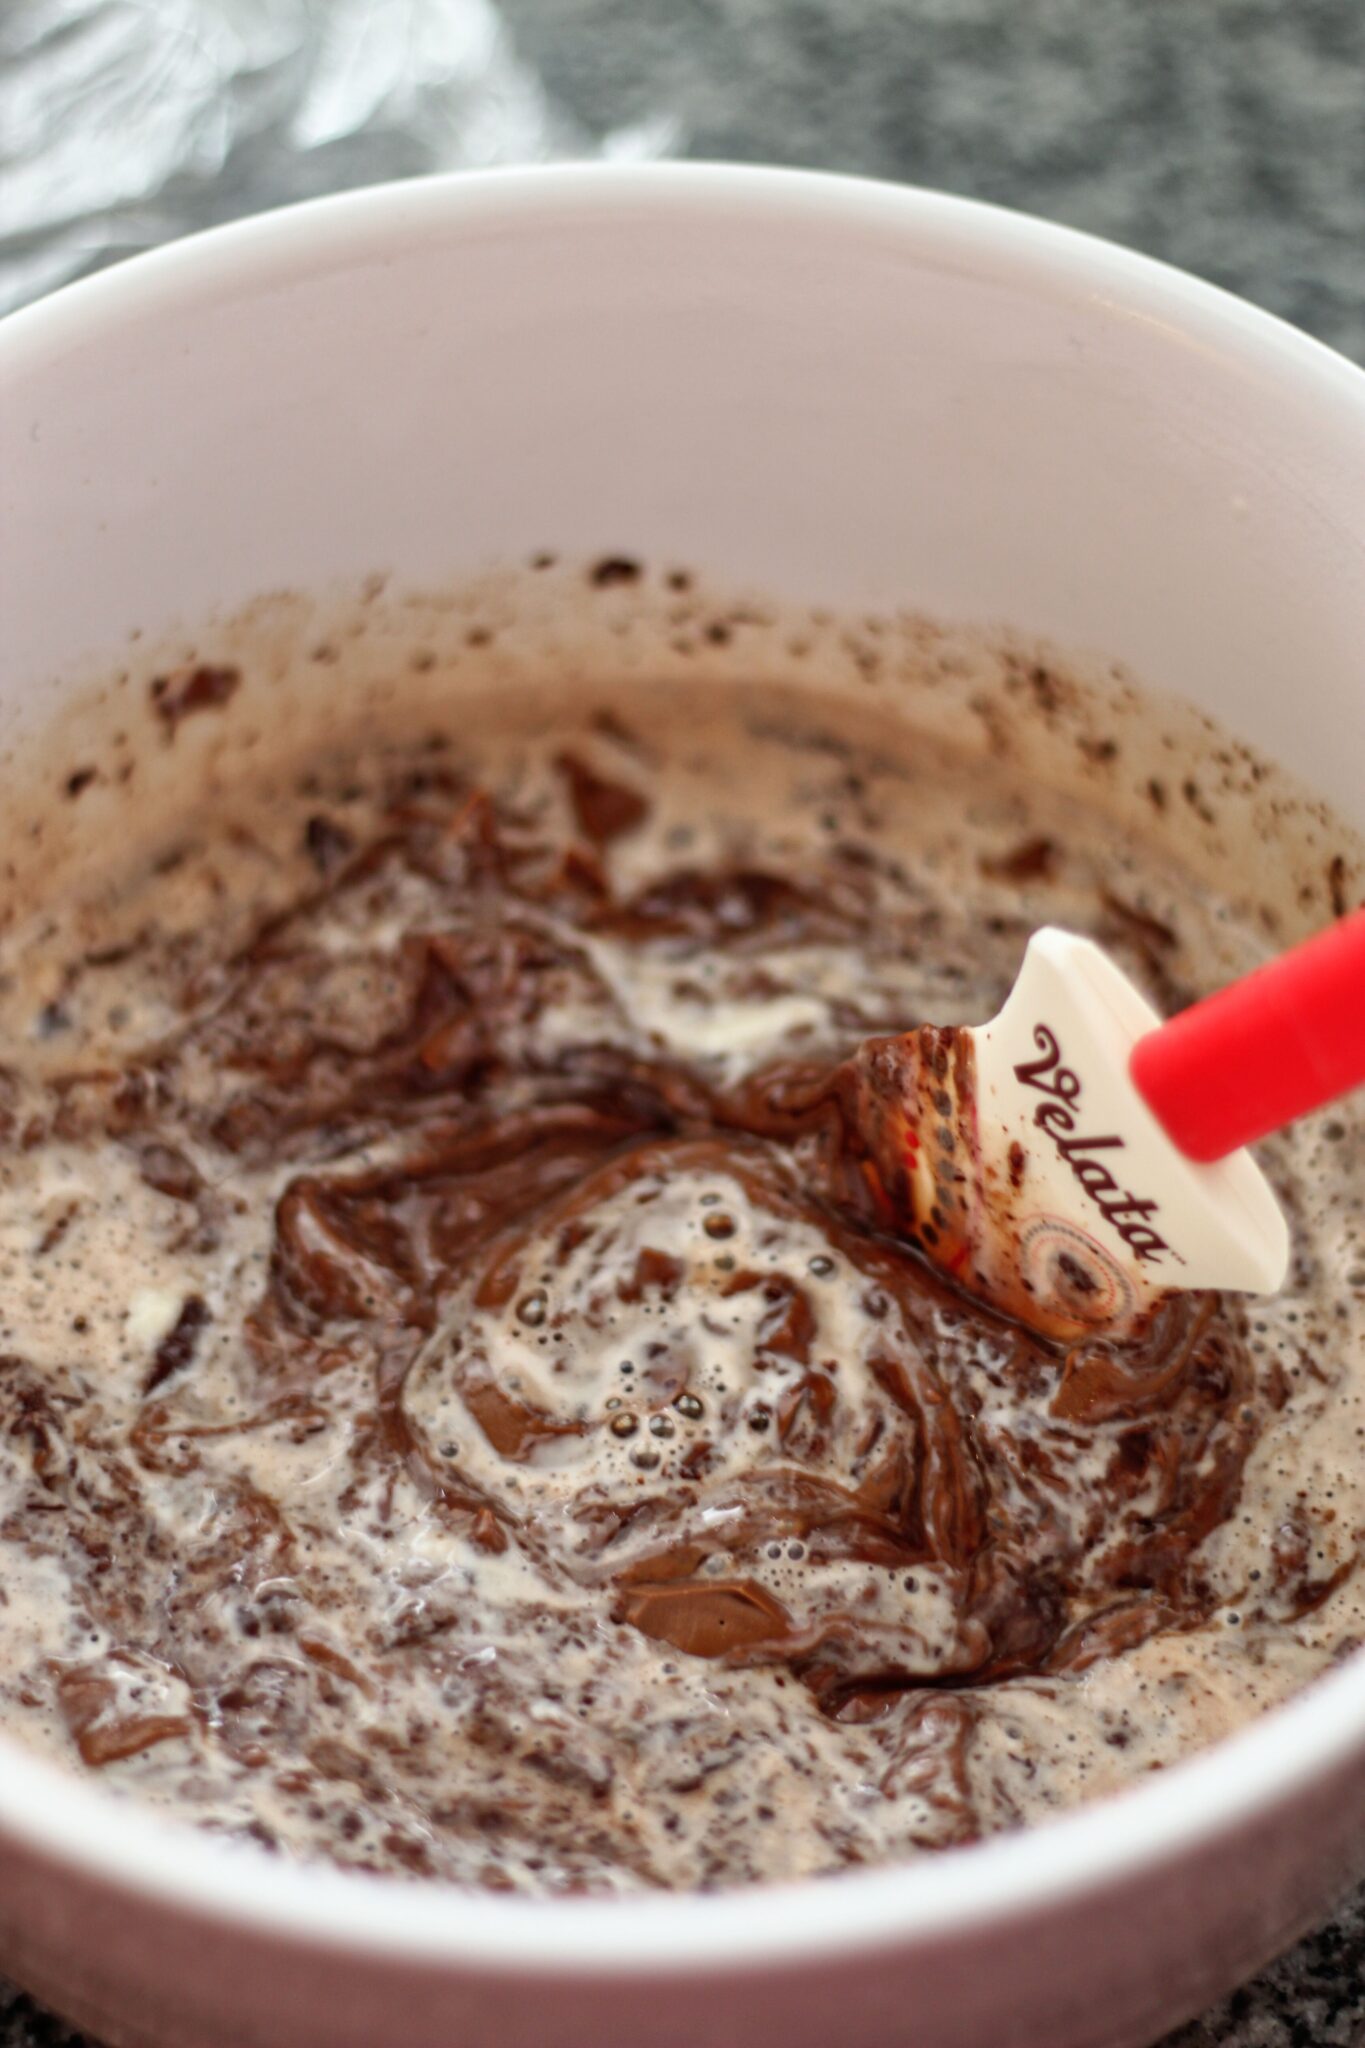 stirring chocolate ganache